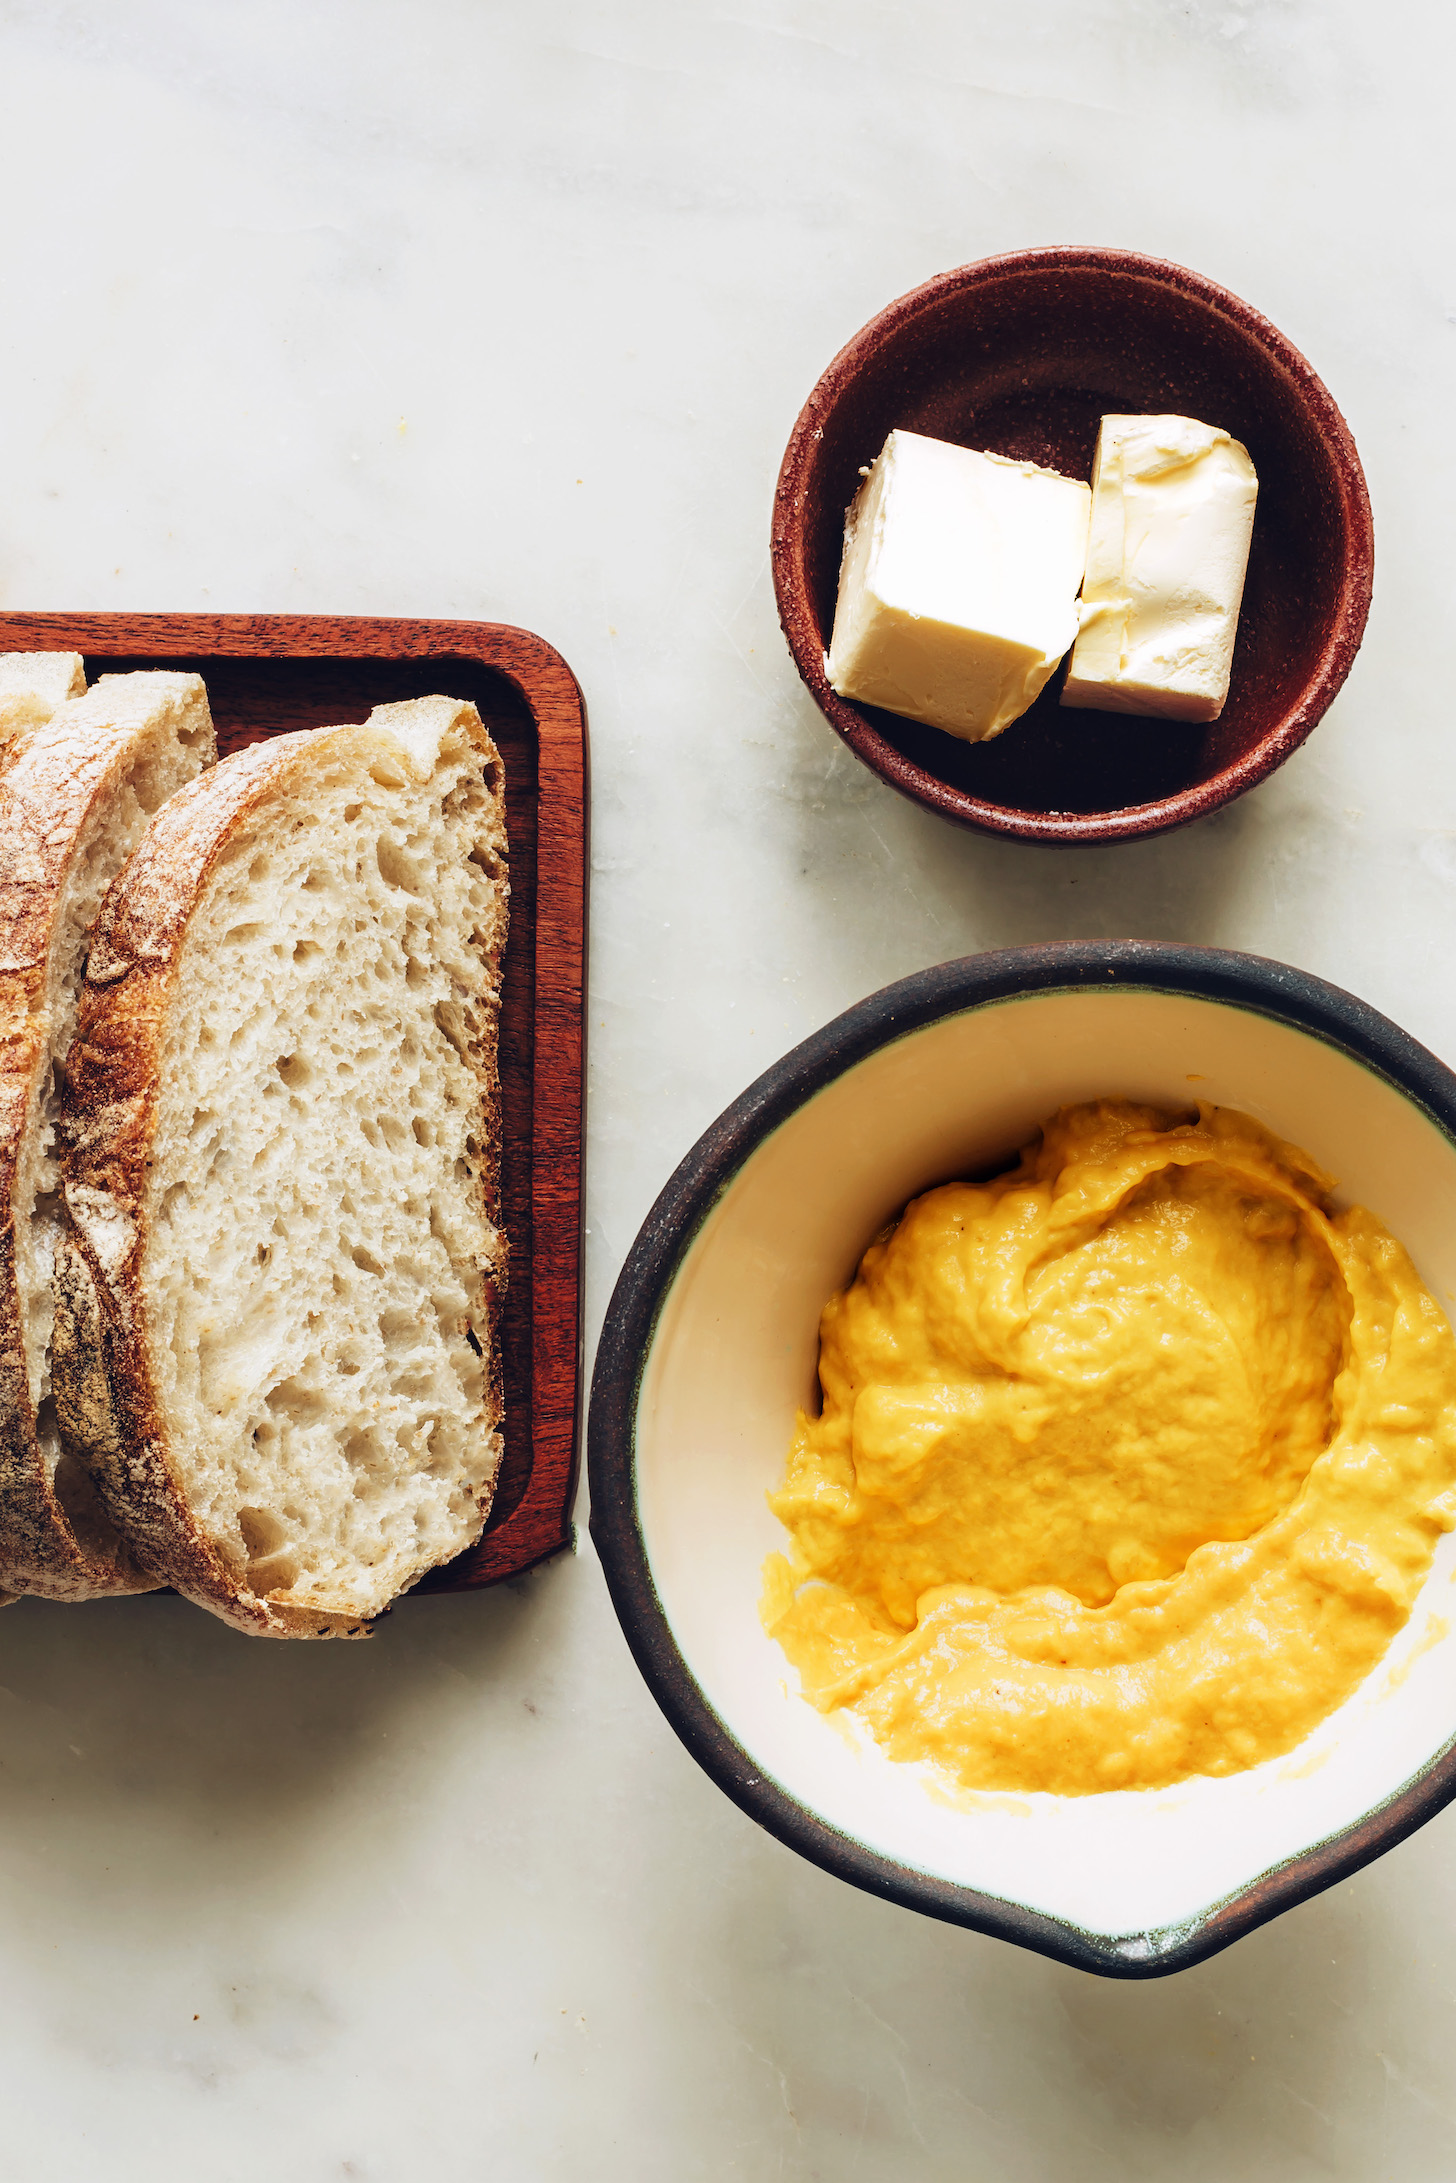 Sourdough bread, vegan butter, and vegan cheddar cheese